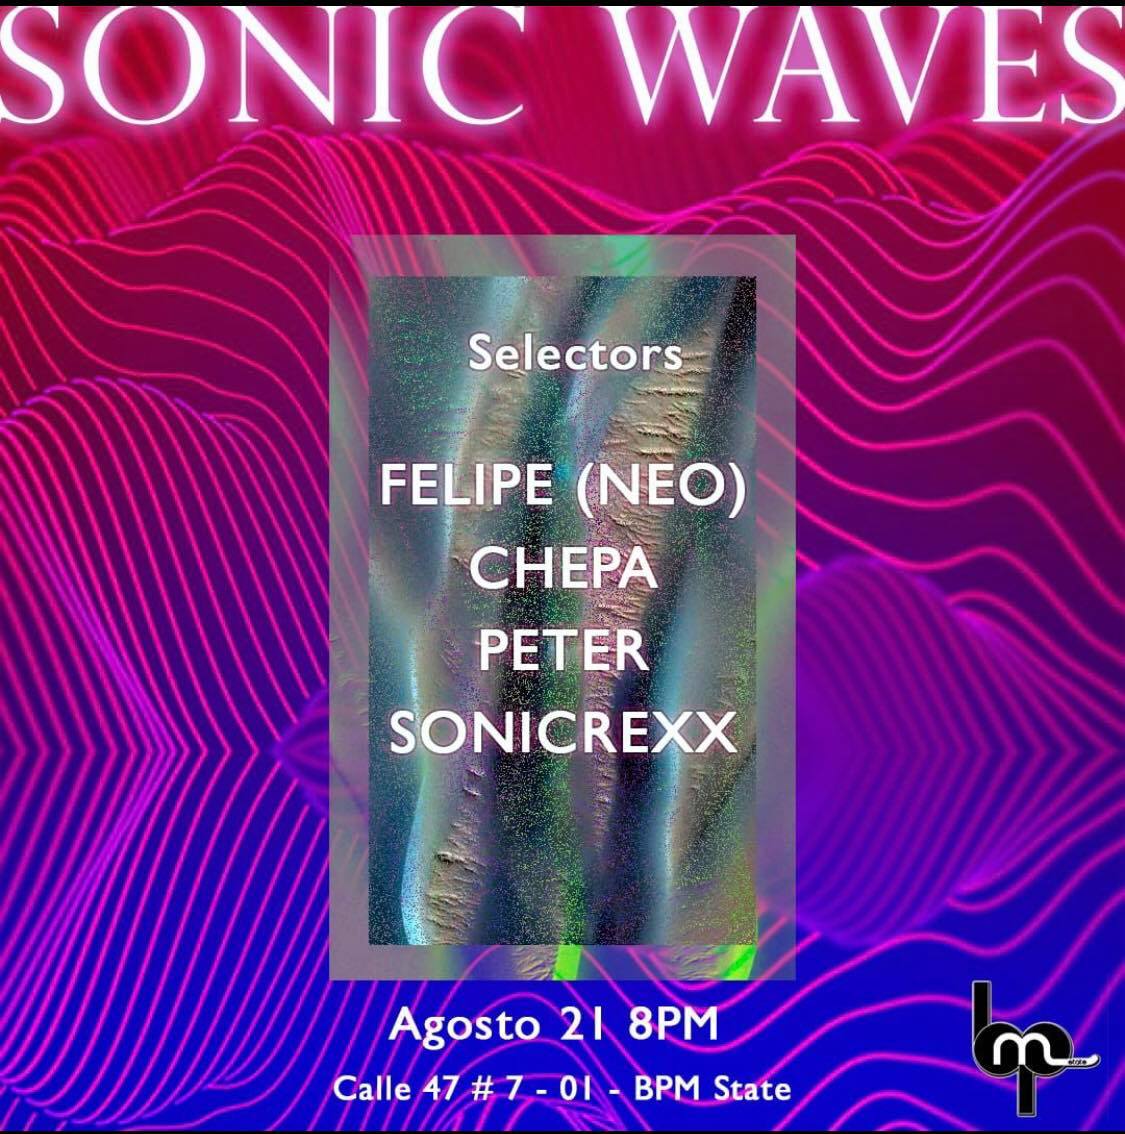 21 Ago 21 - (Sonic Waves)